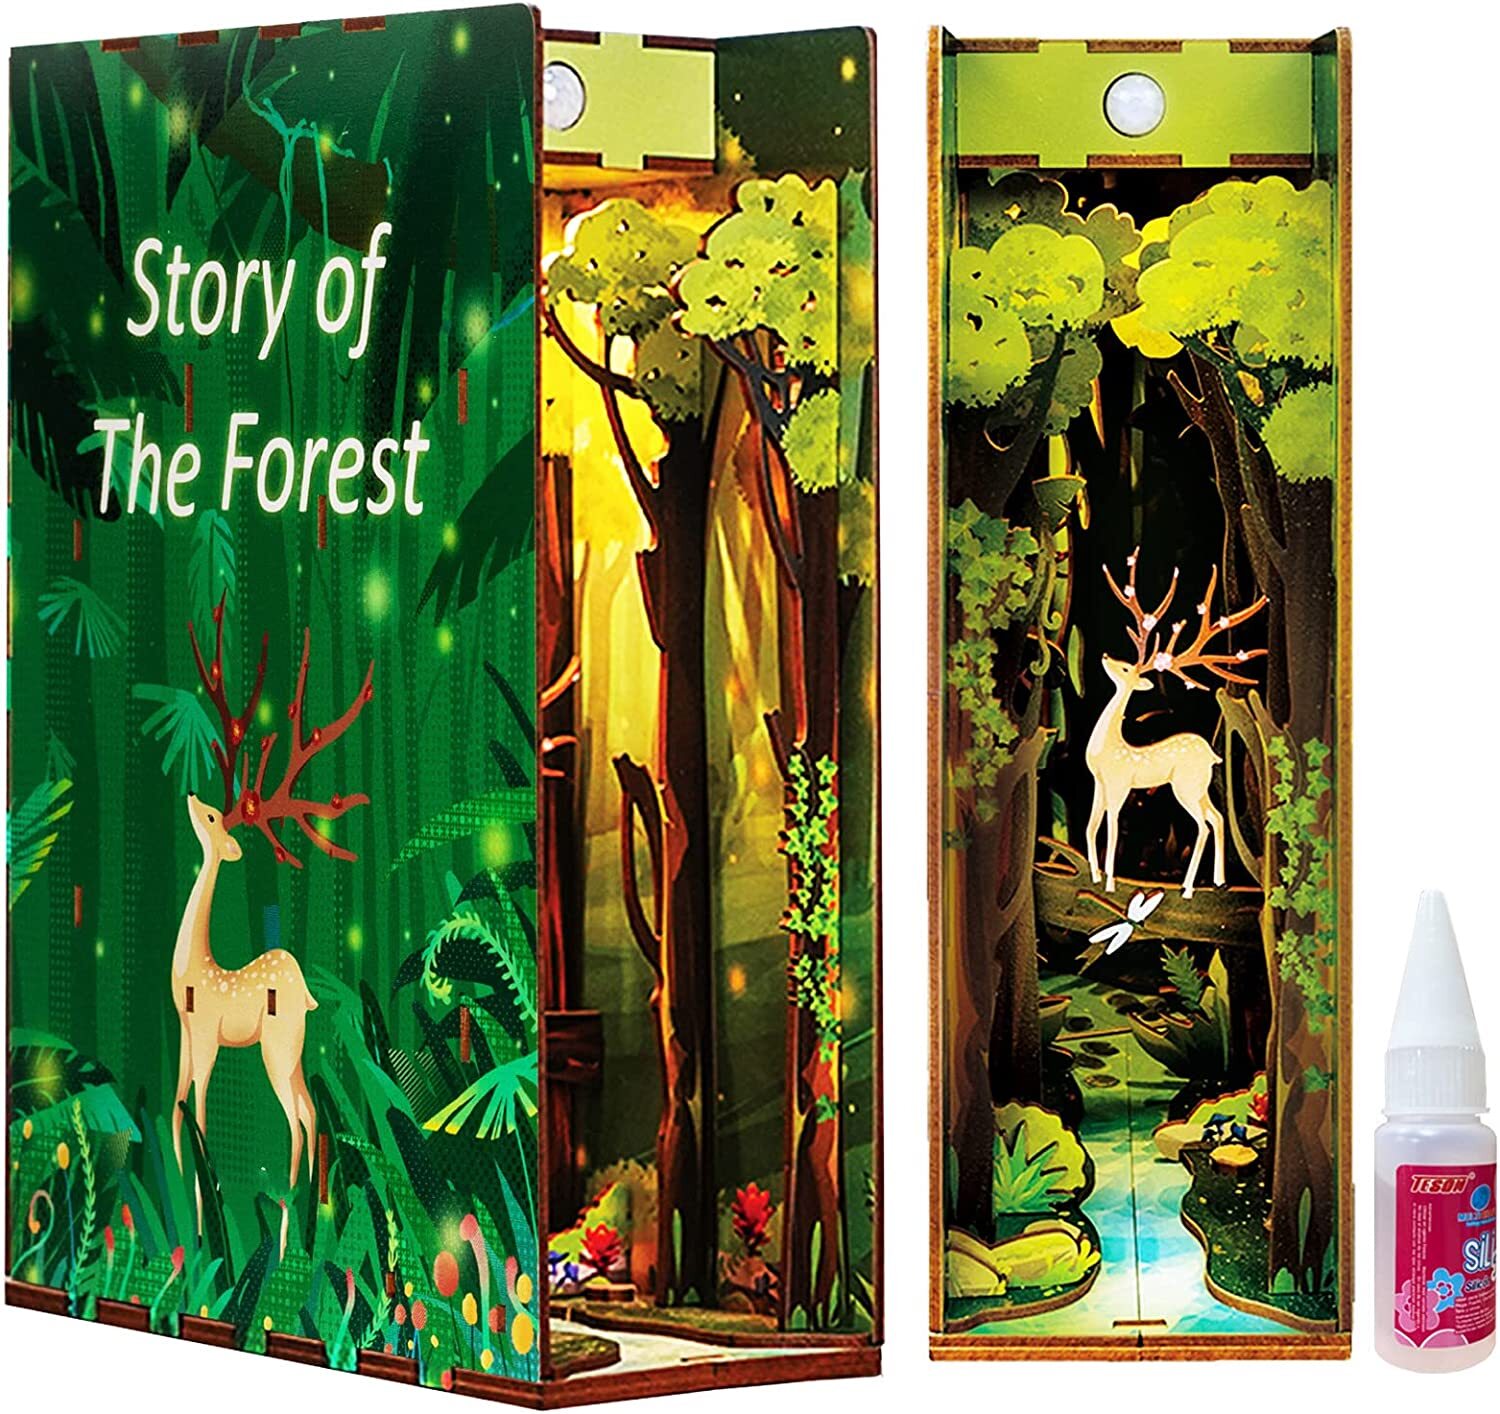 🔥Easter Sale! -Story of The Forest - 3D Wooden DIY Book Nook Kit with Human Sensor LED Light